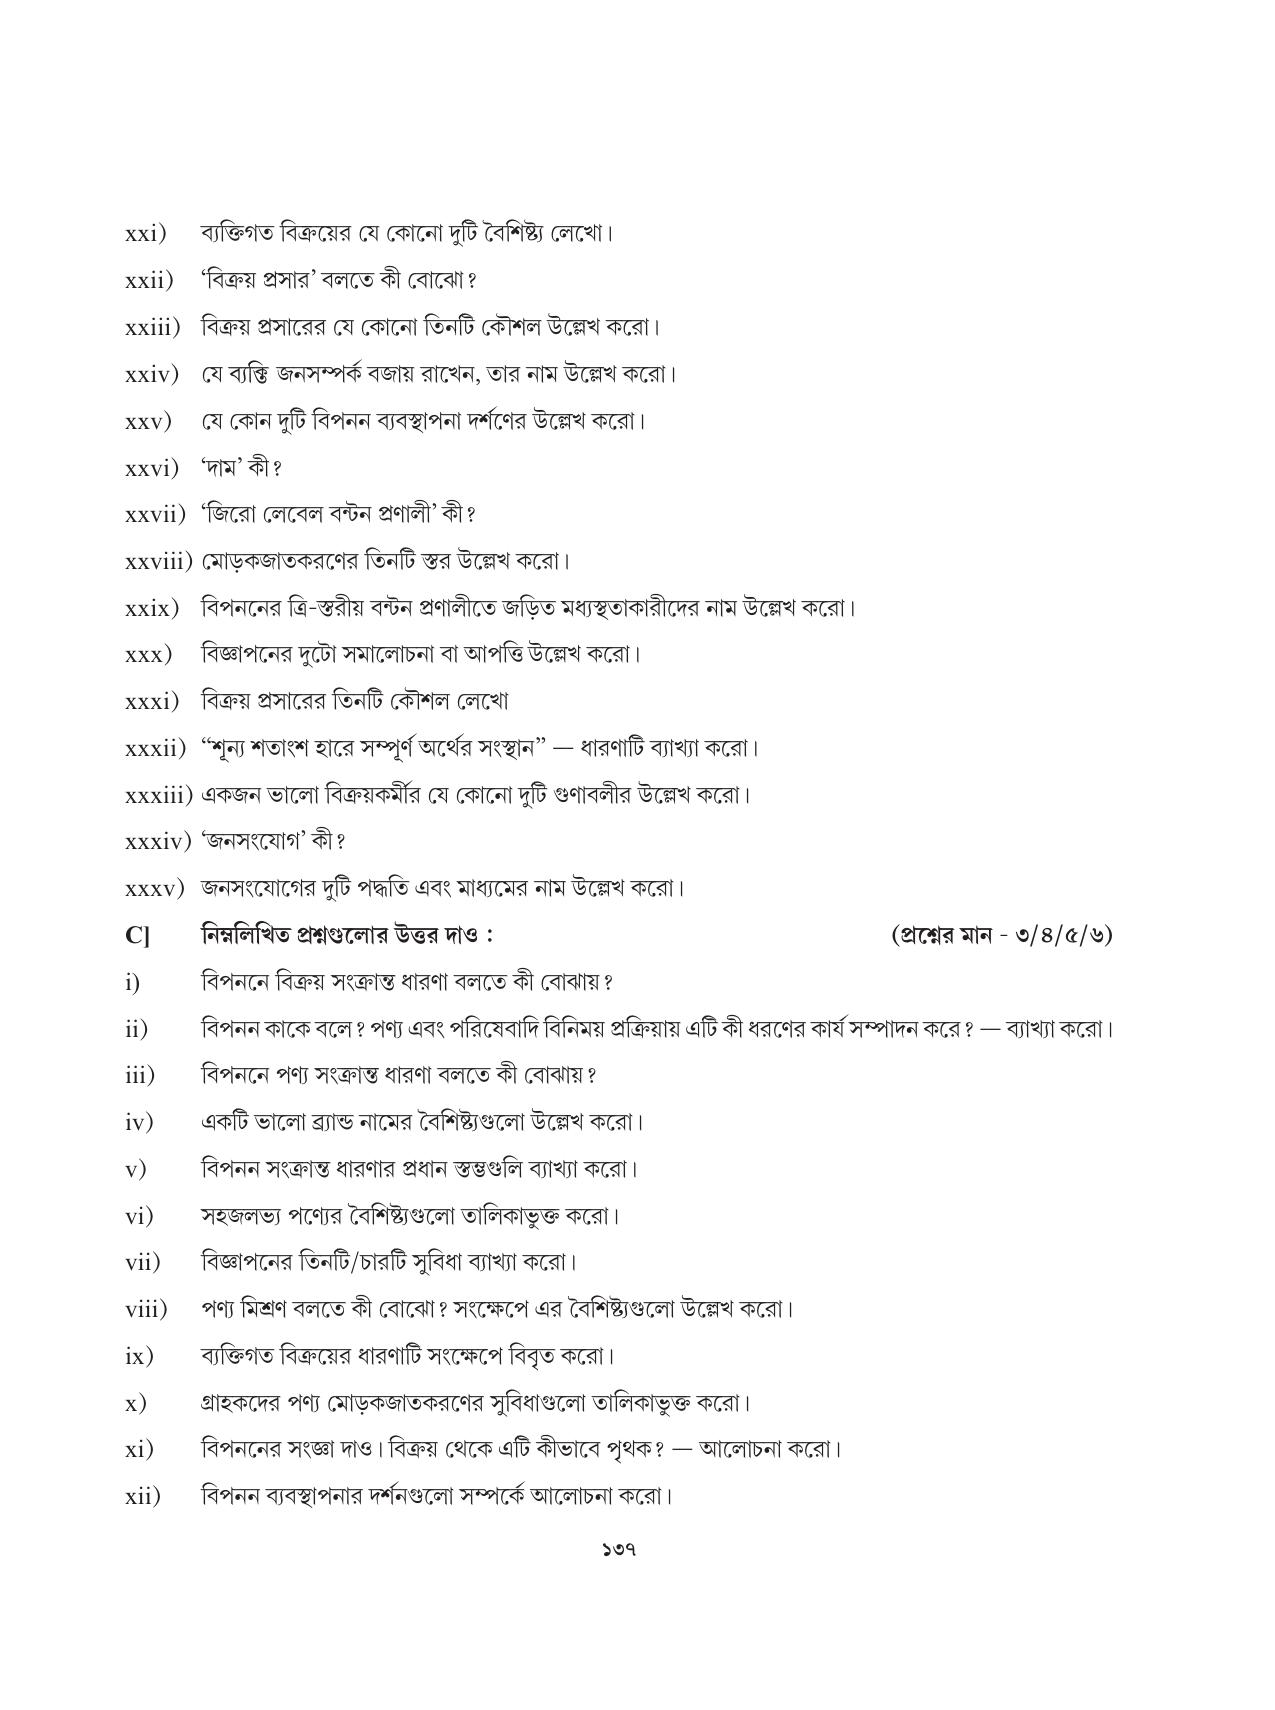 Tripura Board Class 12 Karbari Shastra Bengali Version Workbooks - Page 137